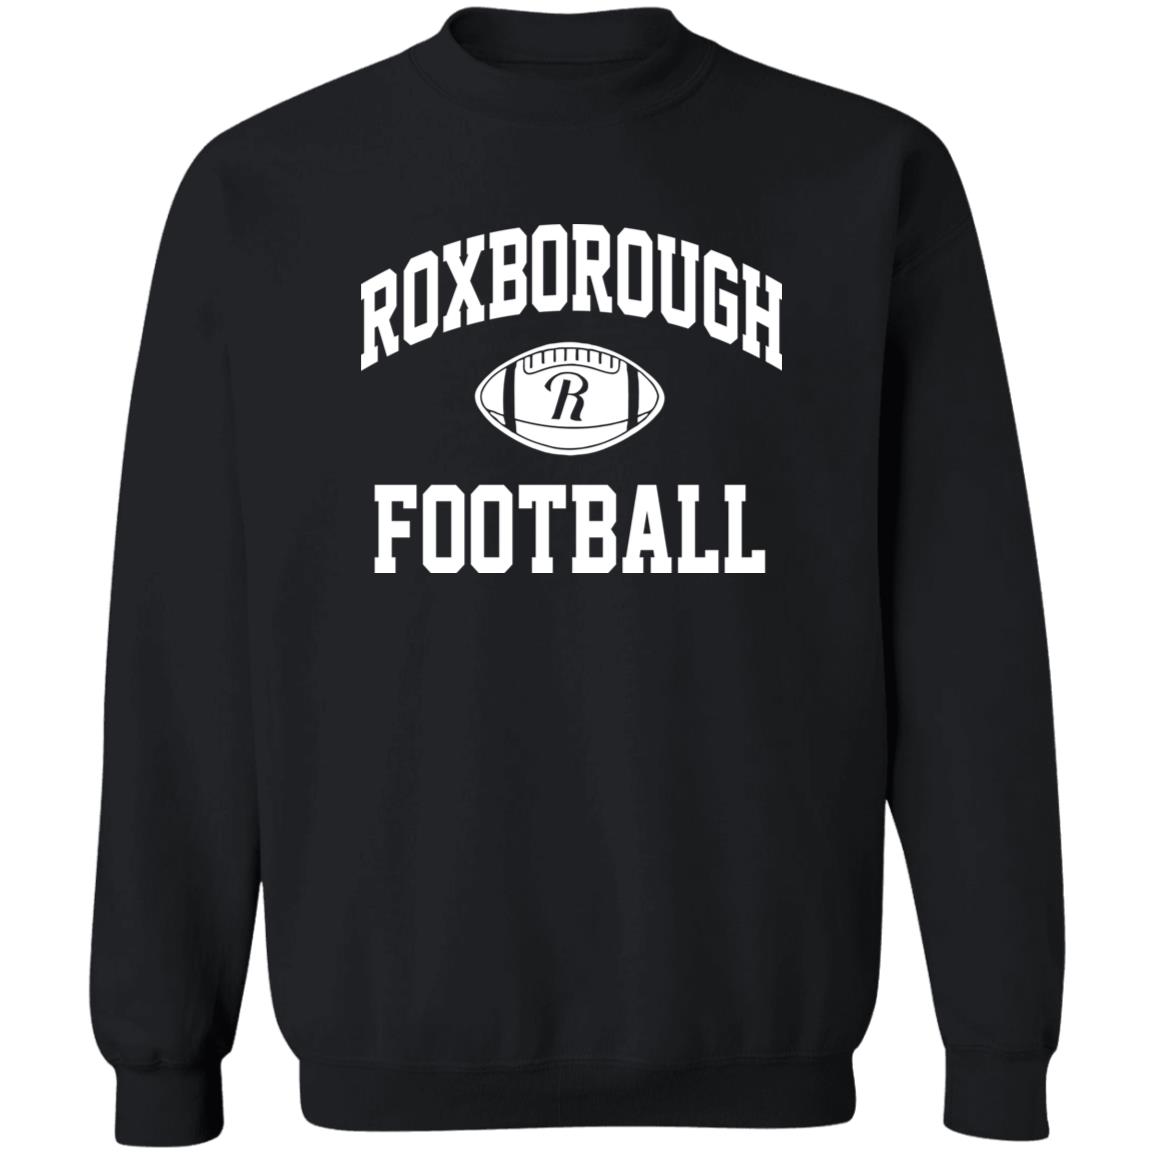 Roxborough Football Shirt 1